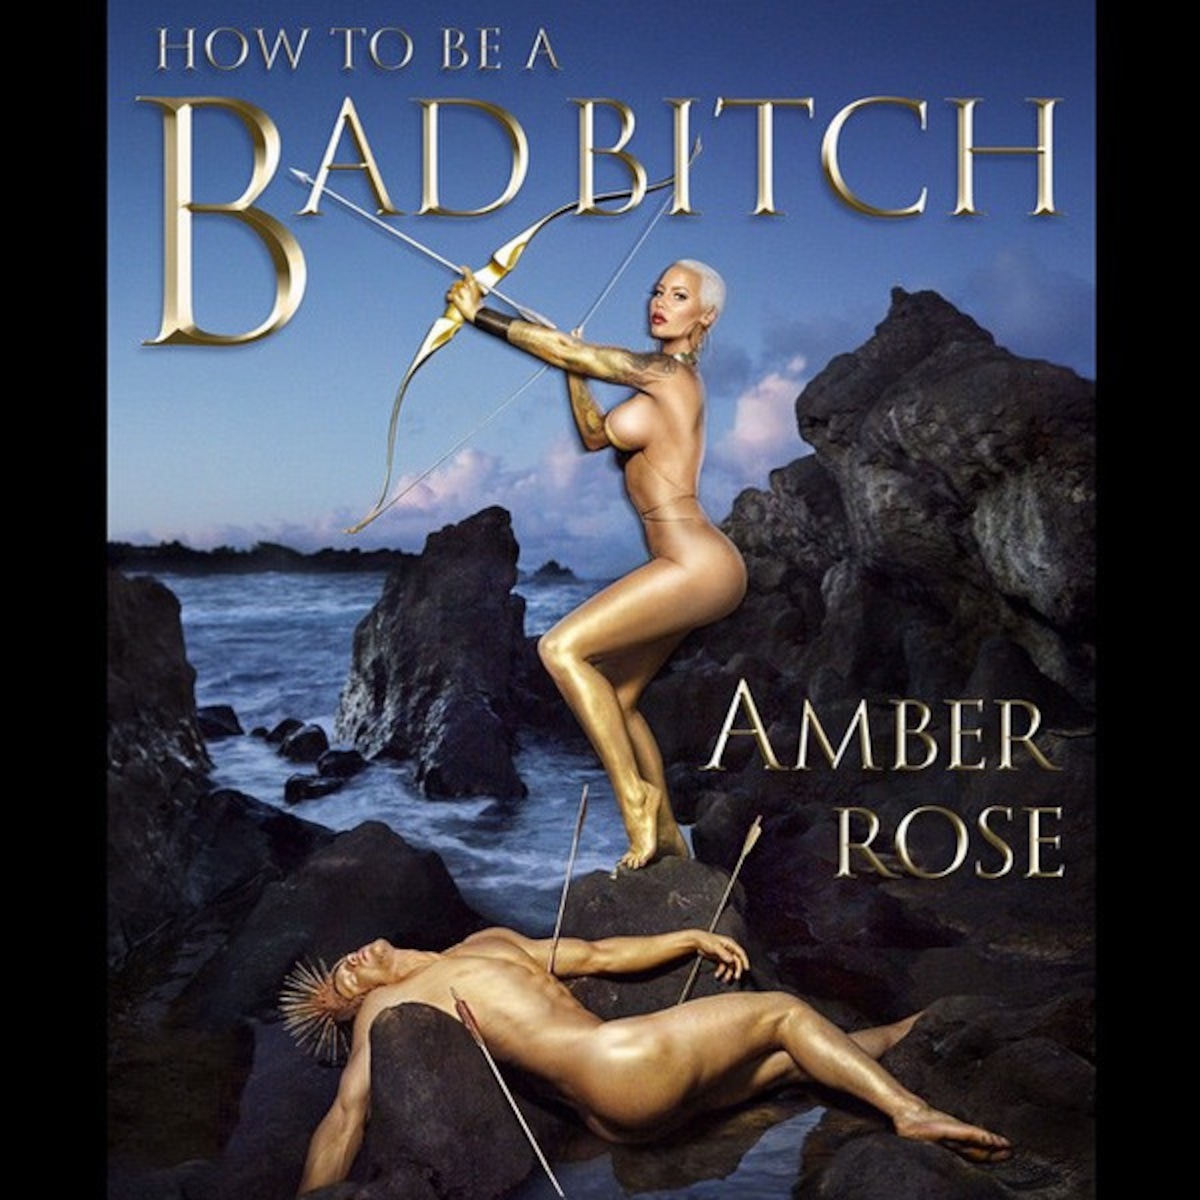 Amber rose nude photo shoot